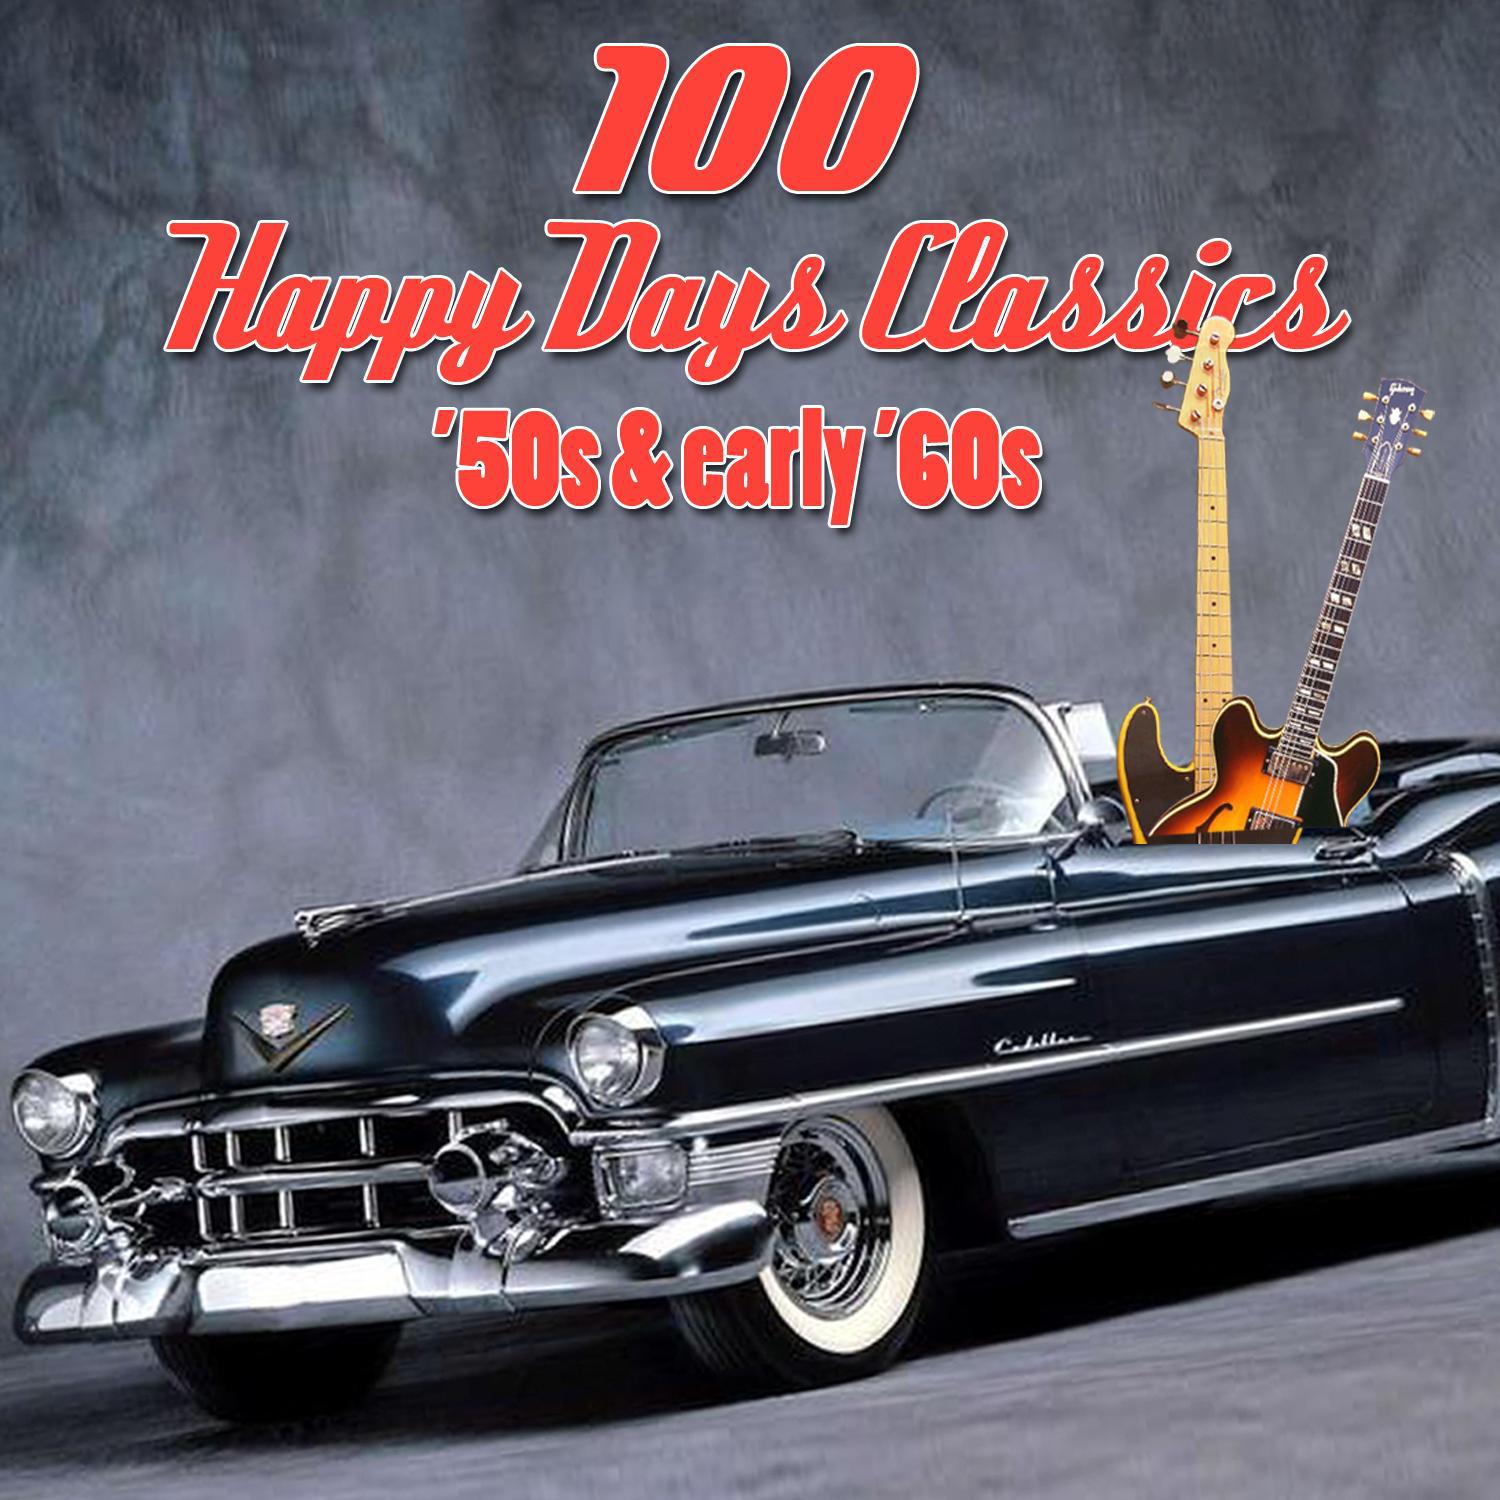 100 Happy Days Classics - '50s & Early '60s